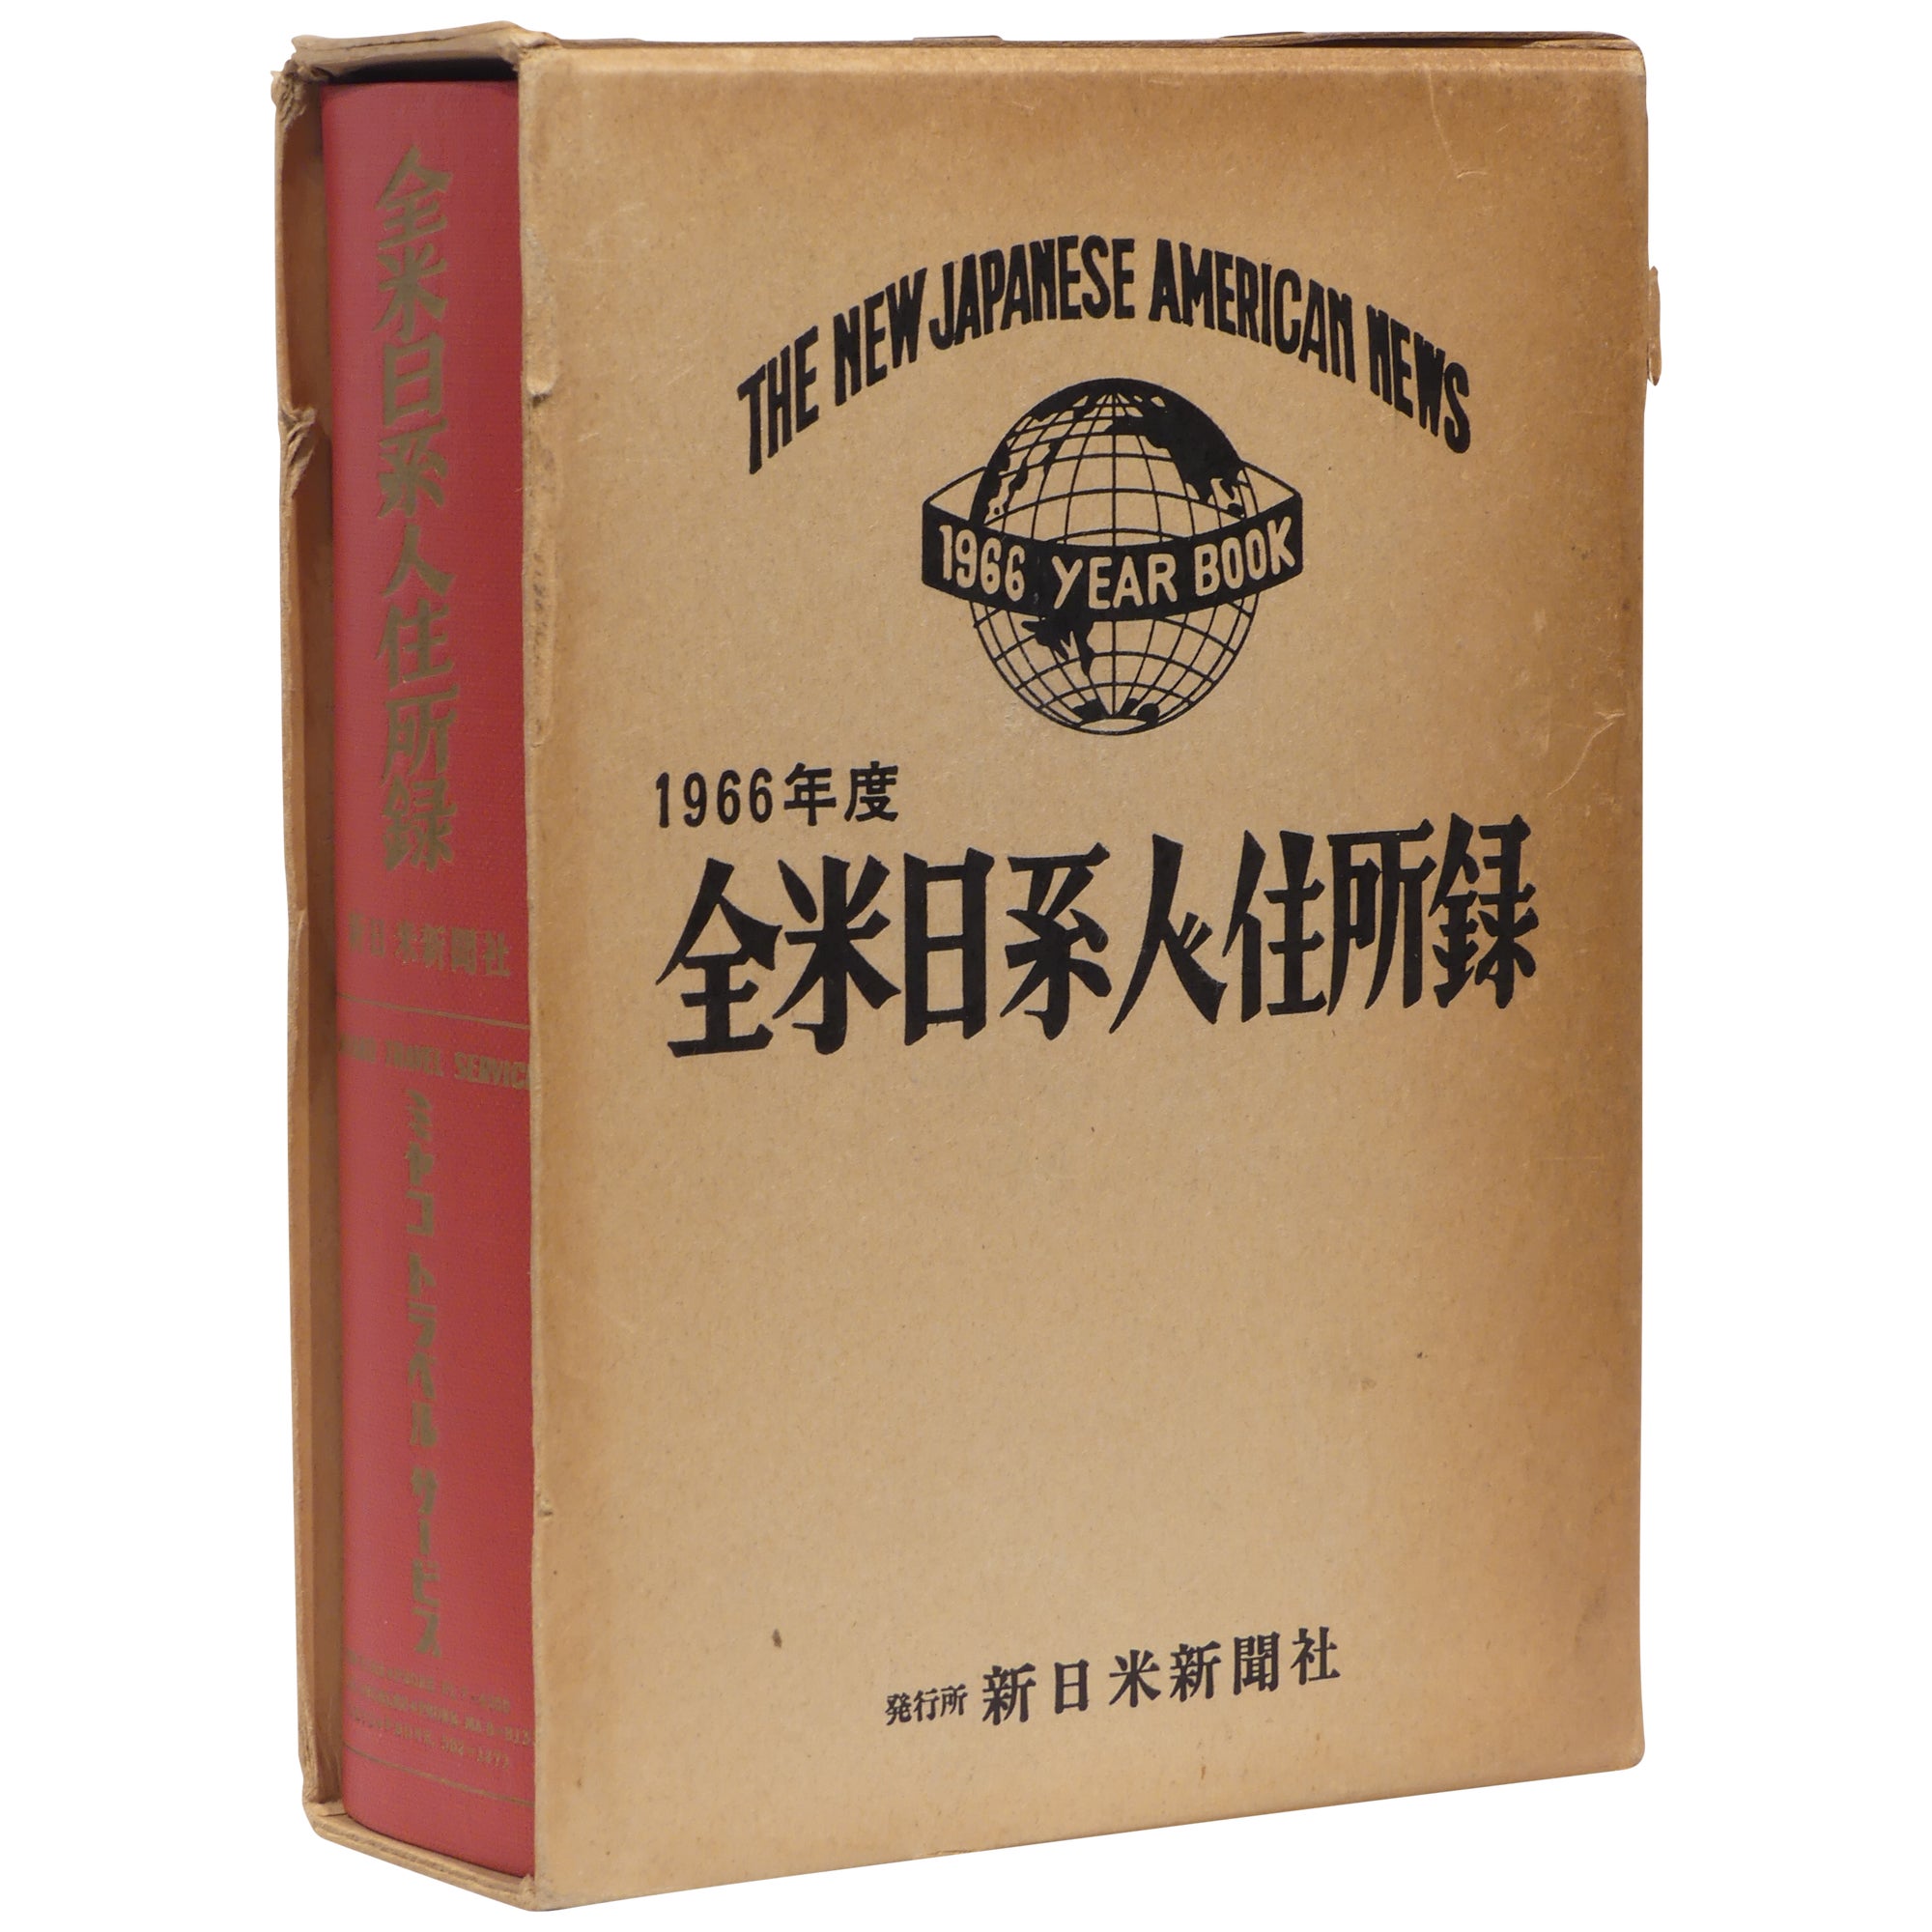 The New Japanese American News 1966 Year Book Zenbei Nikkeijin jushoroku  1966-nendo by Shin Nichibei on Downtown Brown Books